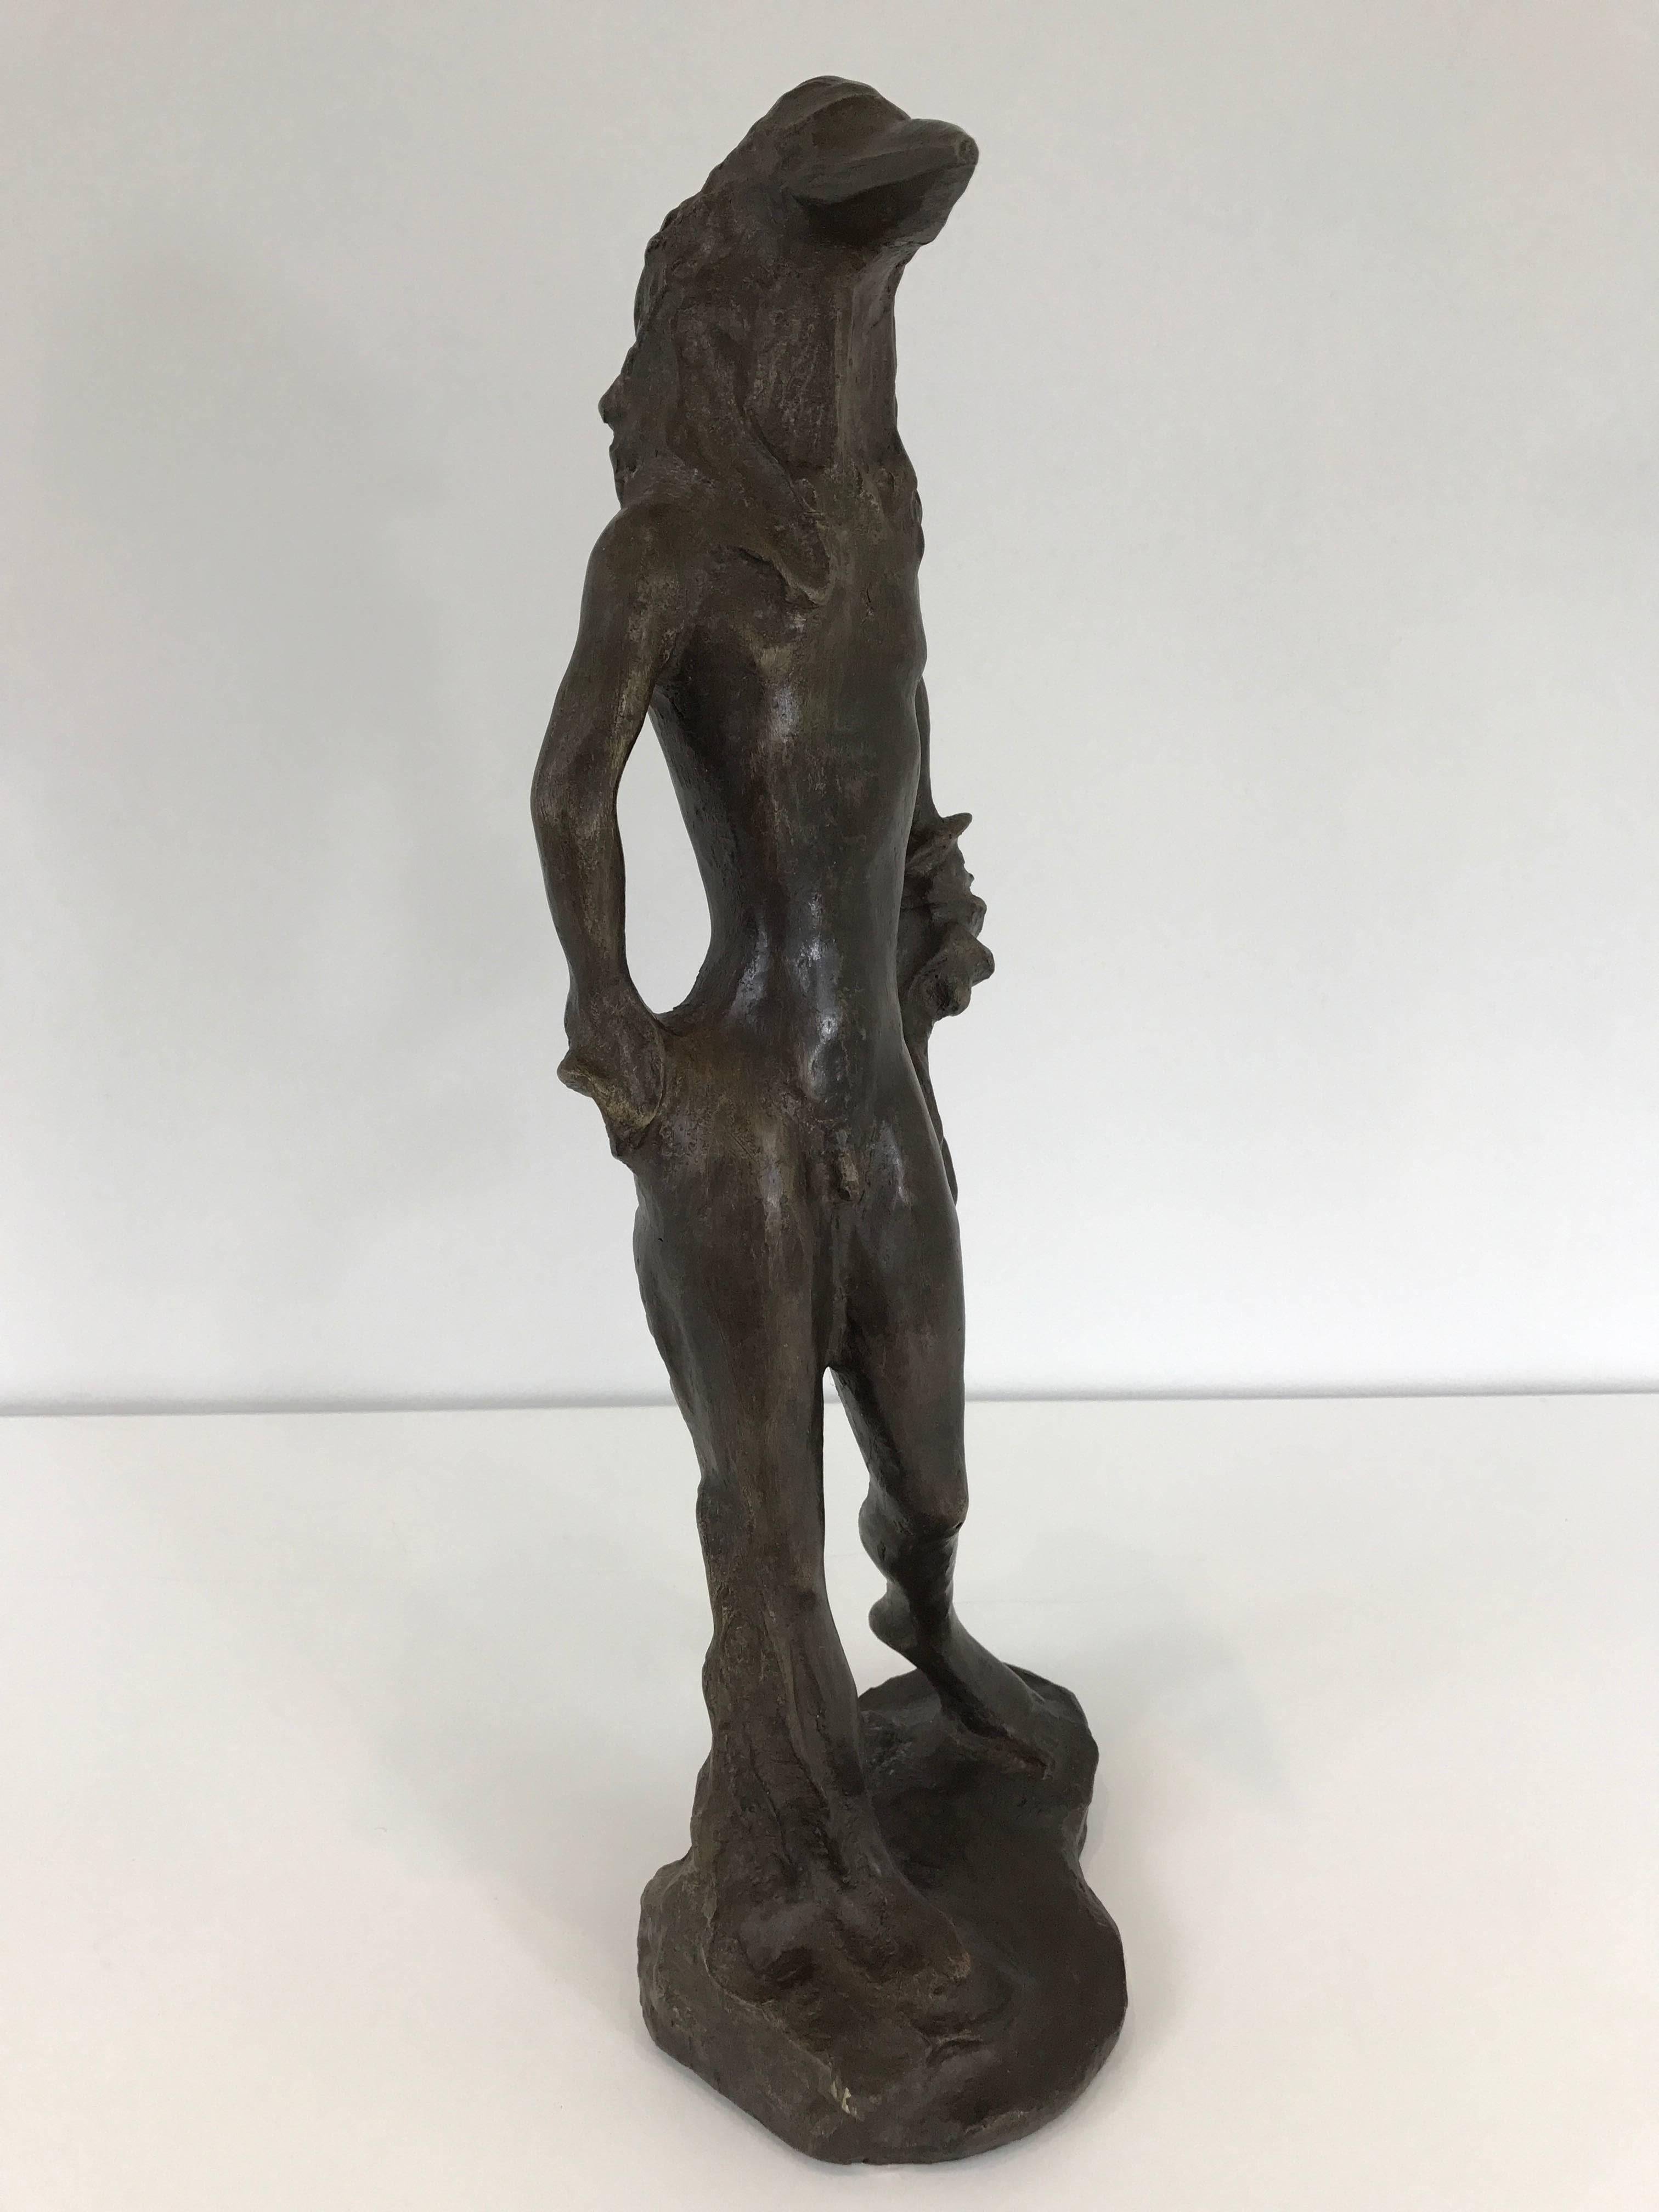 Excellent mid-20th century Birdman bronze sculpture after Salvador Dali.